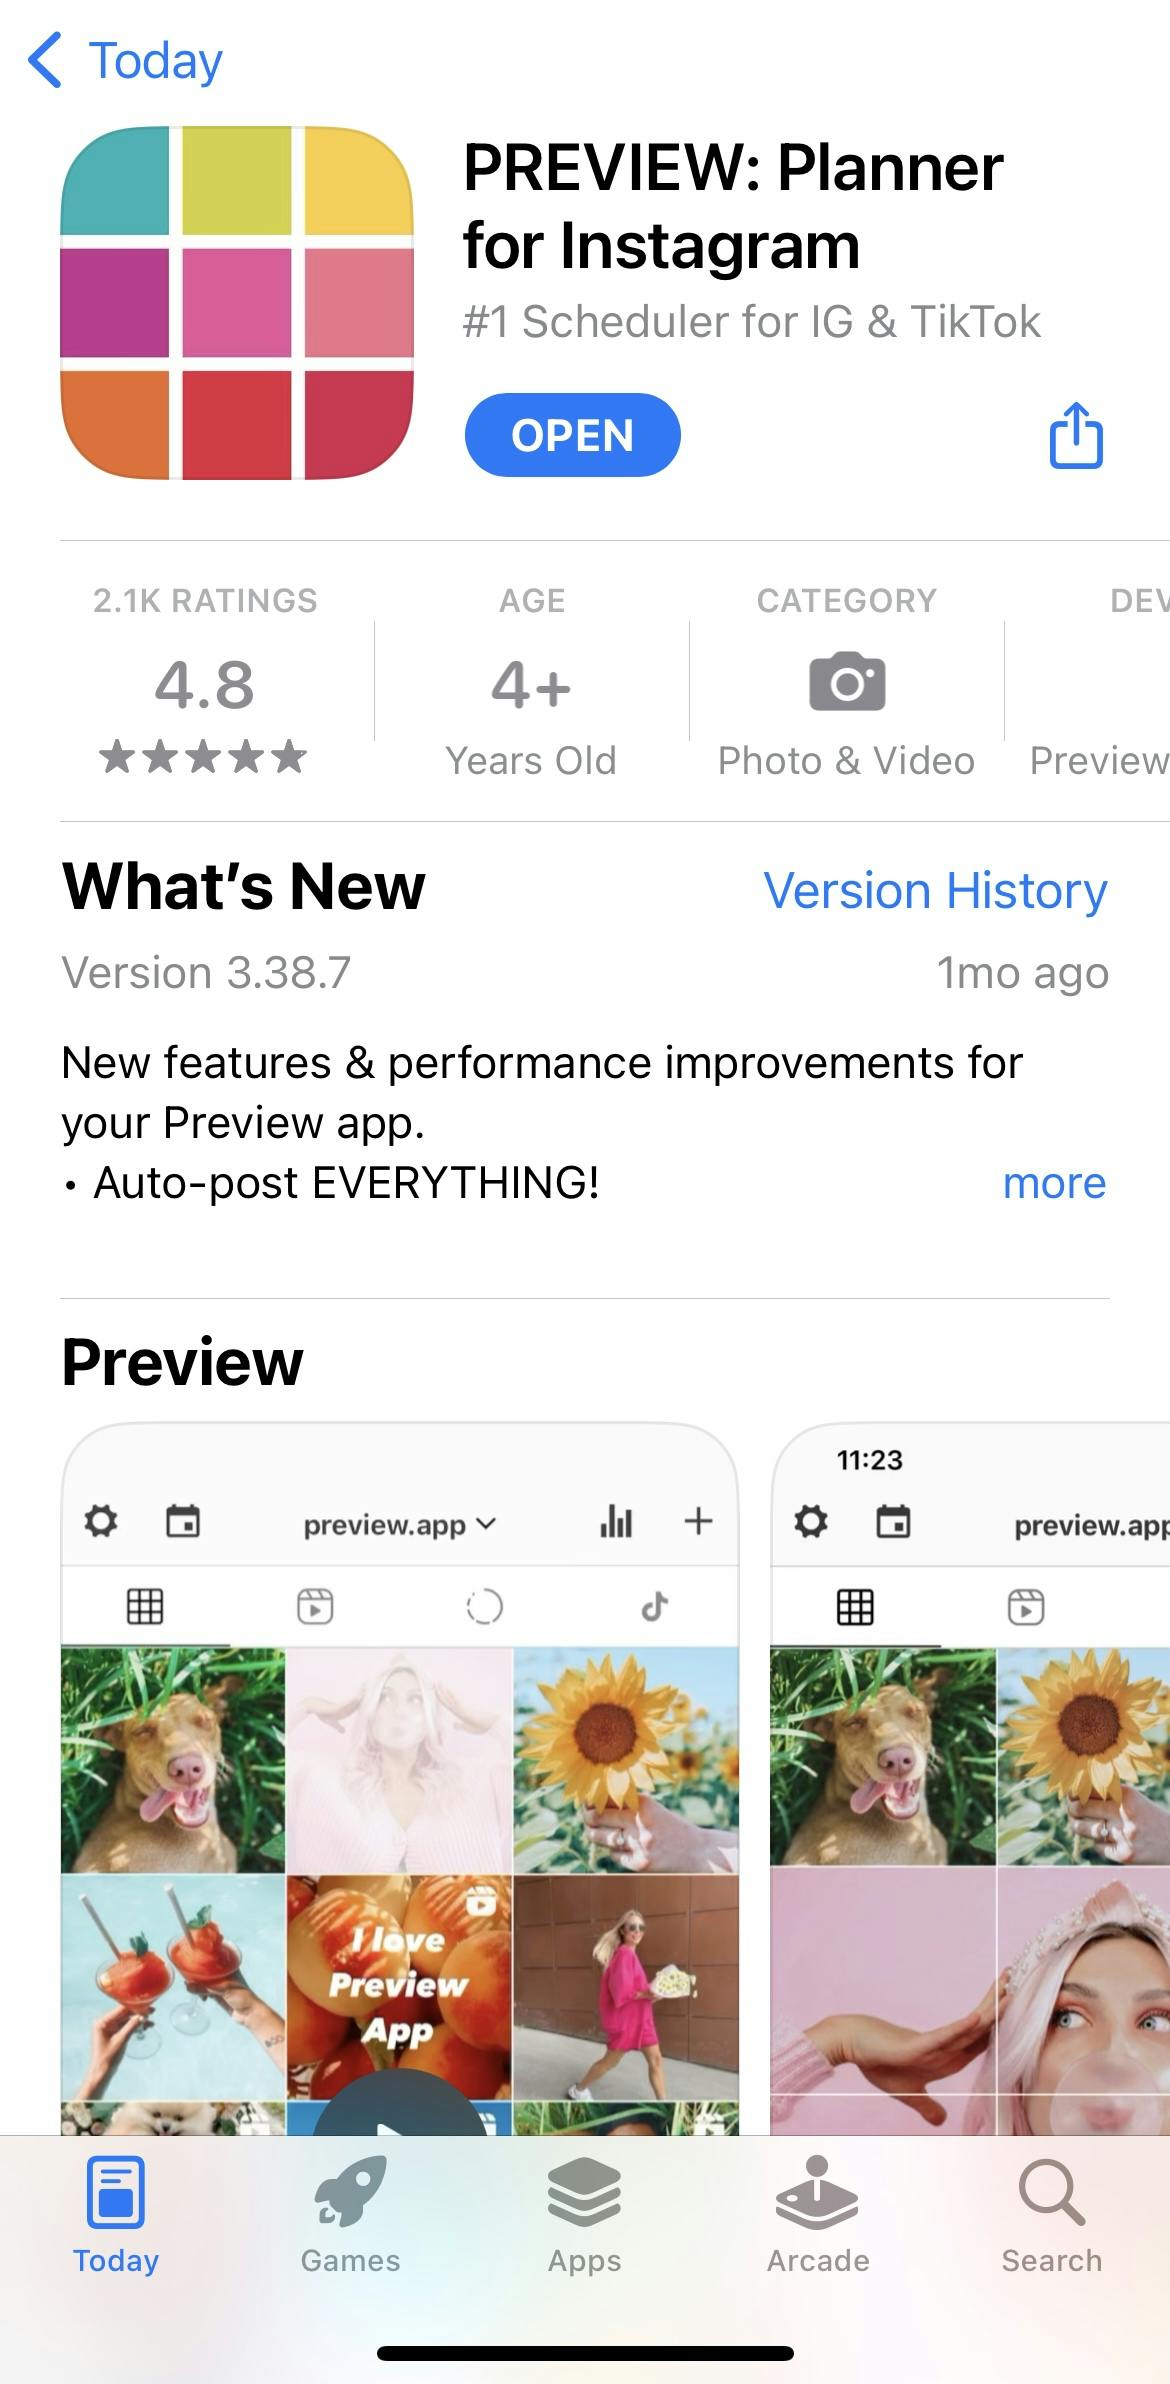 Preview App - Mobile Planner for Instagram